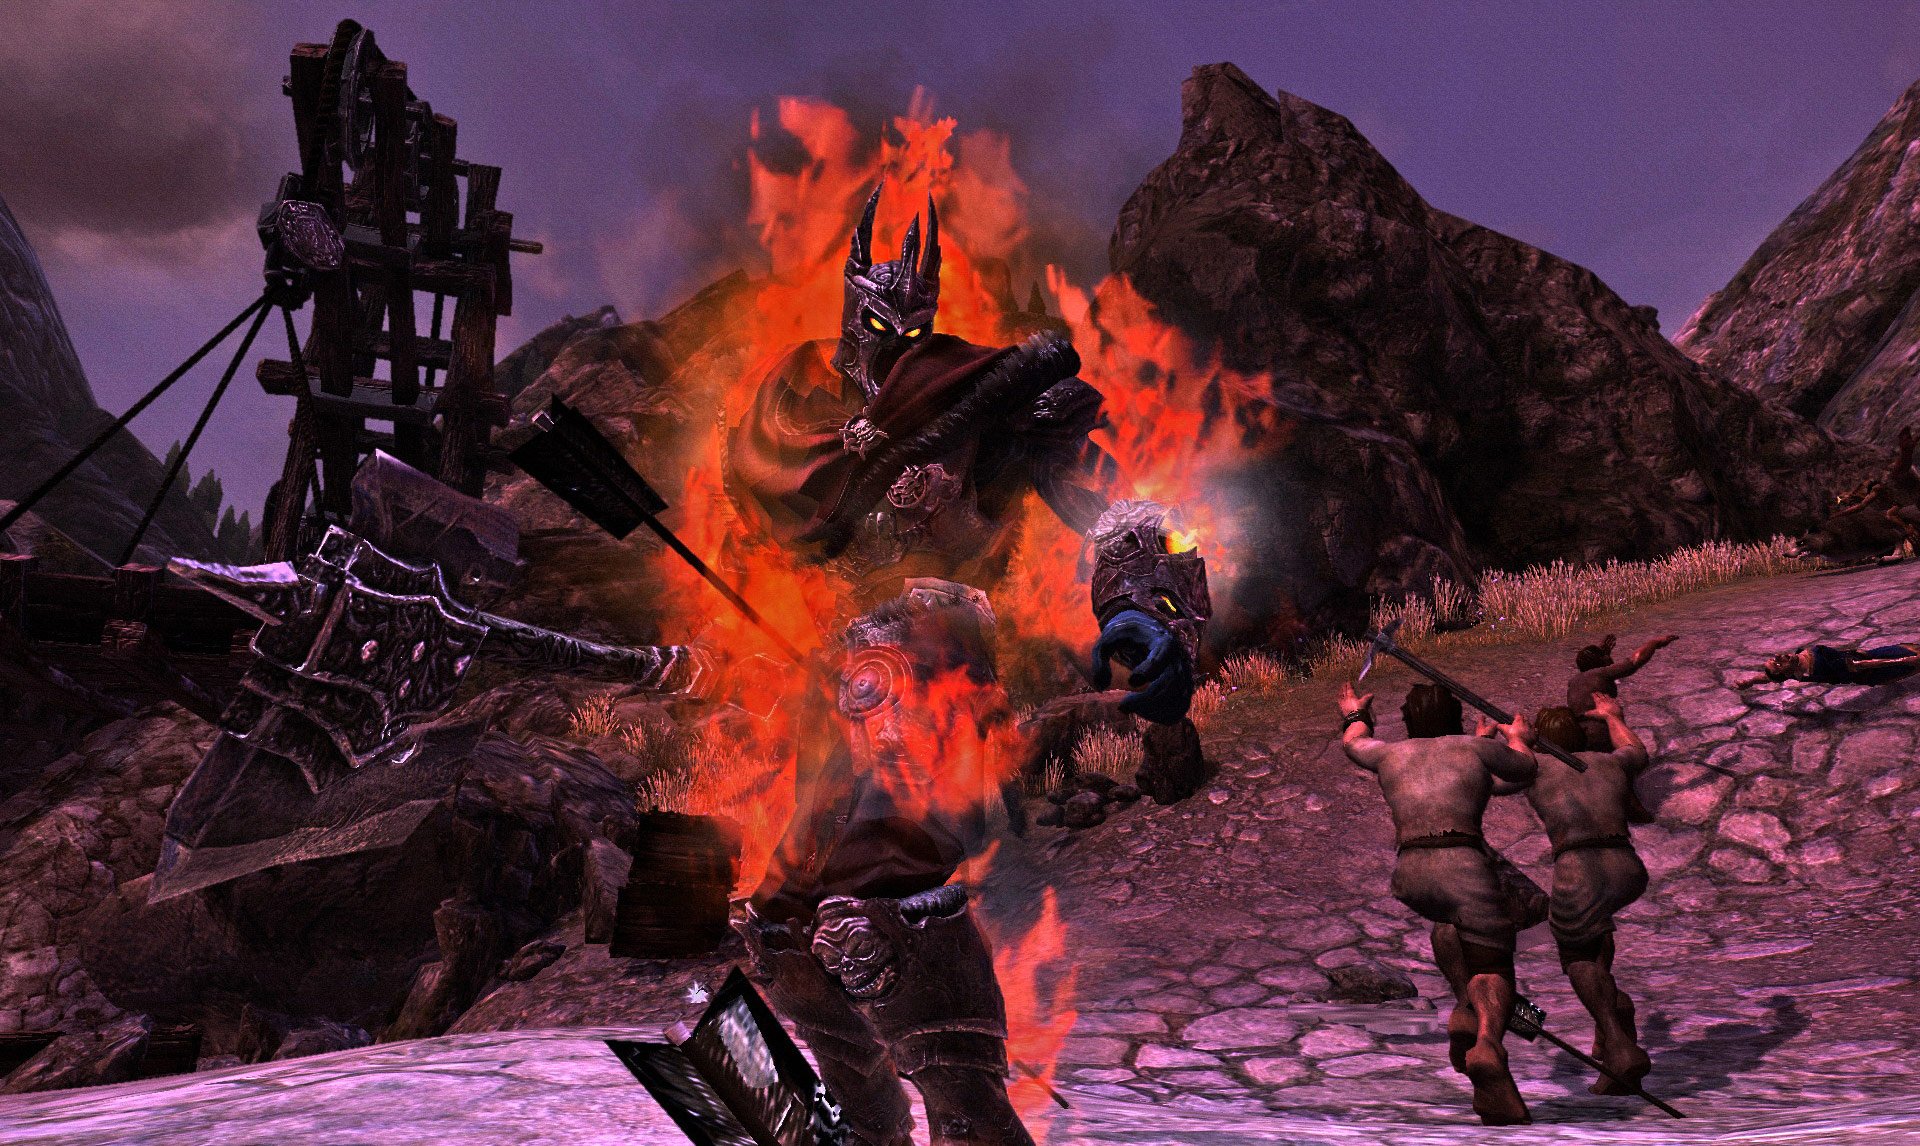 Overlord II screenshot